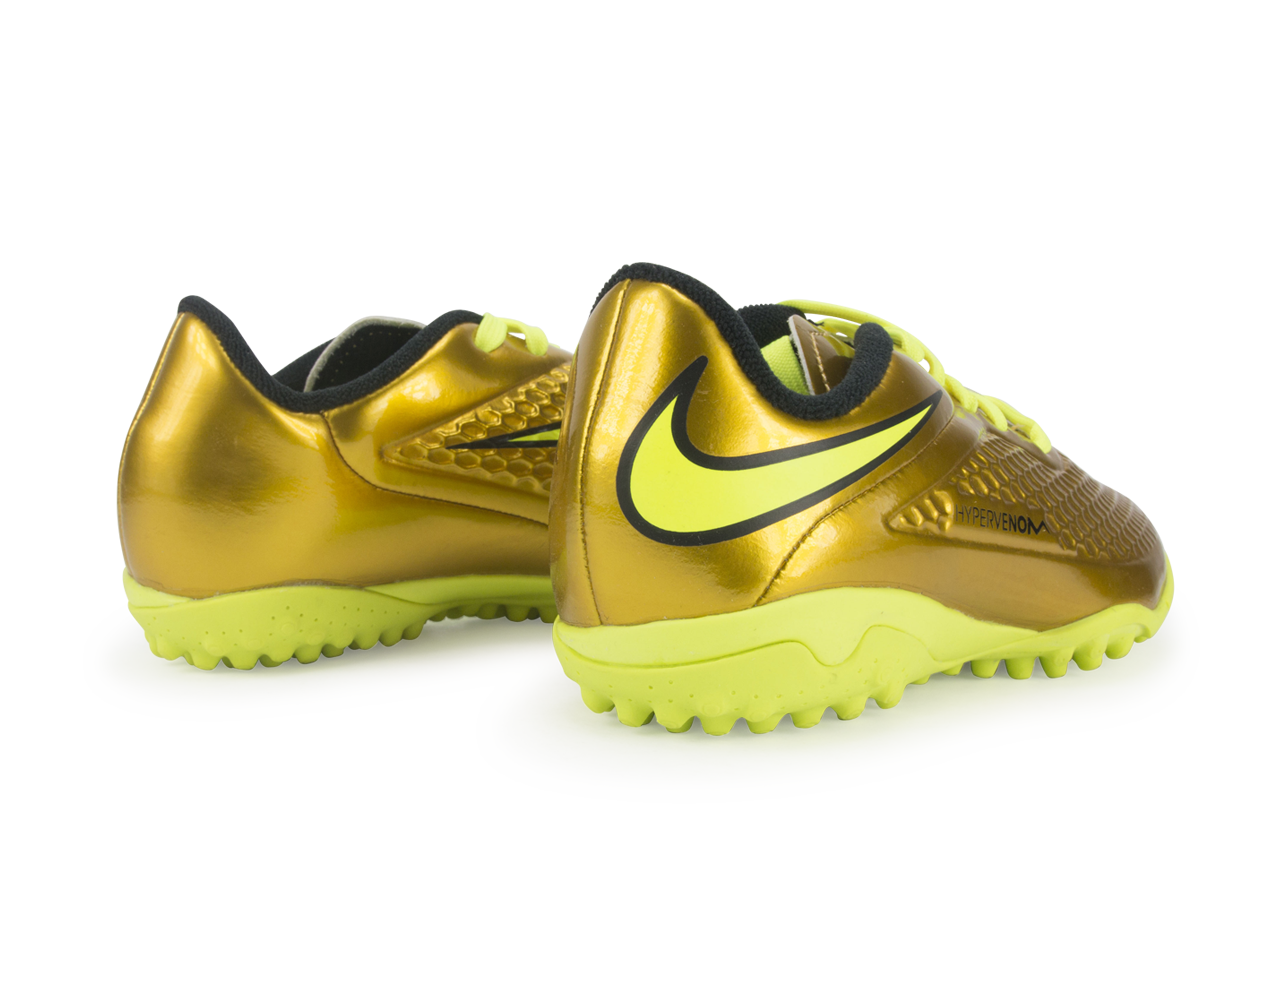 Nike Kids Hypervenom Phelon Turf Soccer Shoes Metallic Gold/Black/Tour Yellow